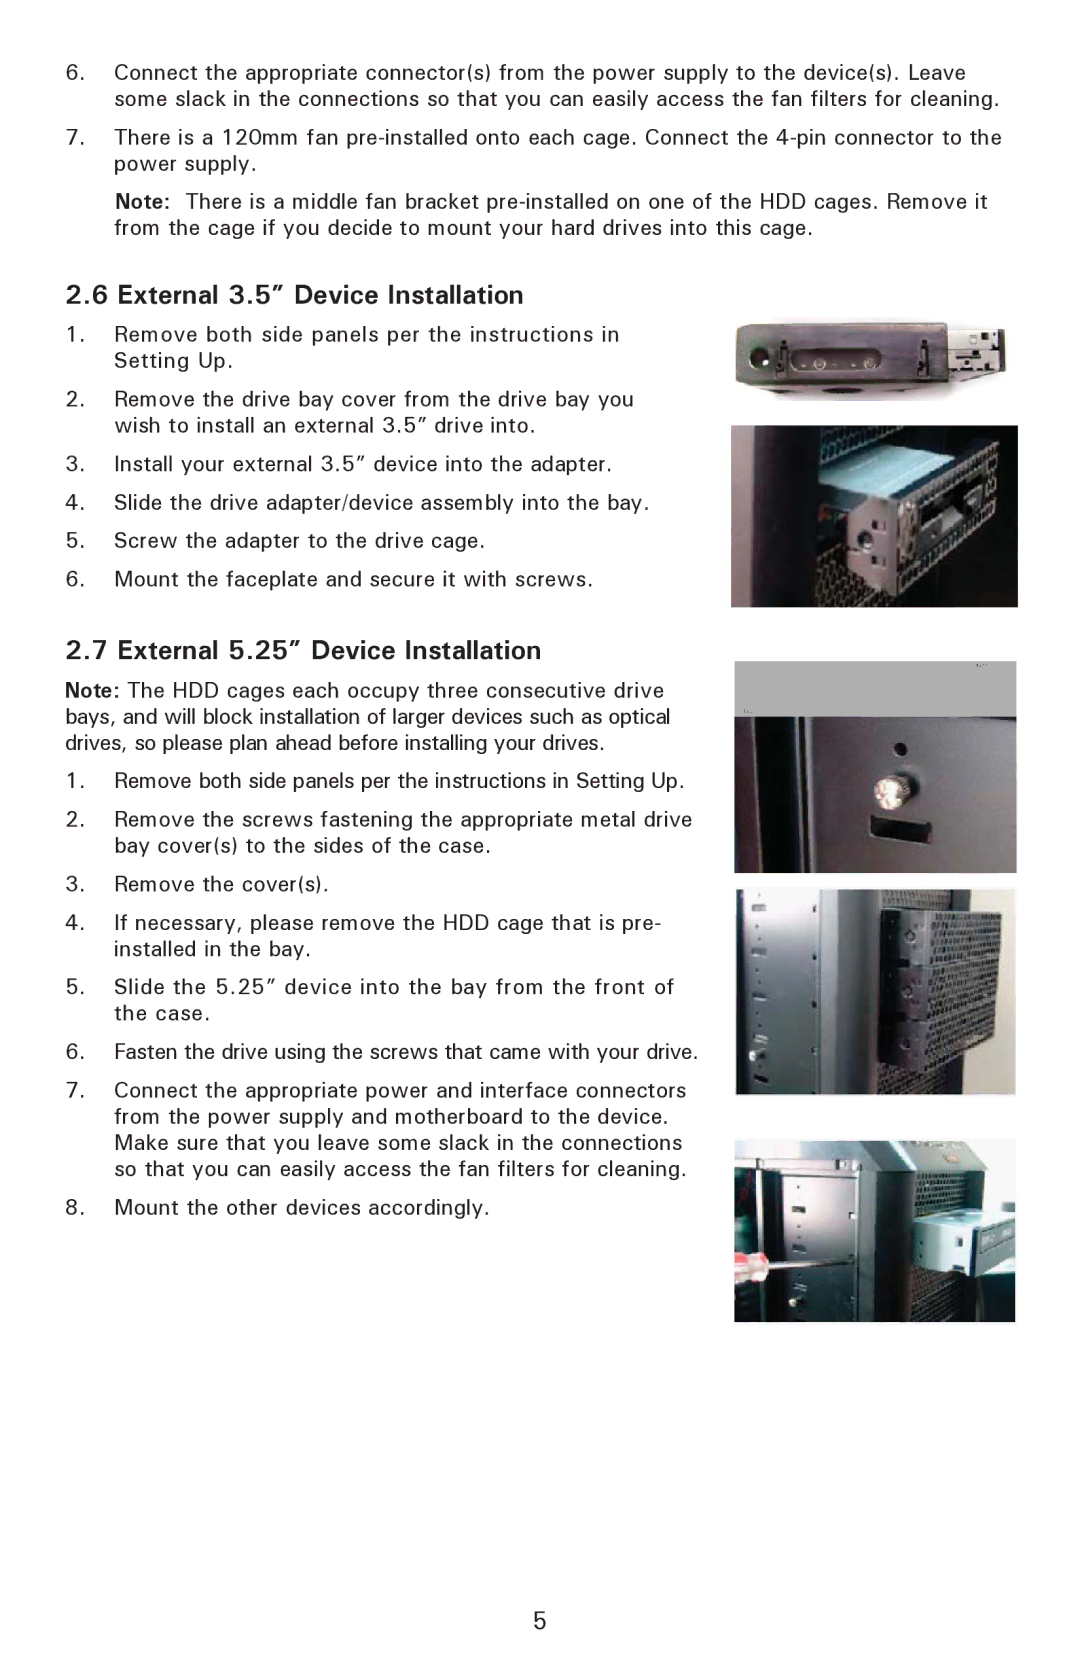 Antec 902 user manual External 3.5 Device Installation, External 5.25 Device Installation 